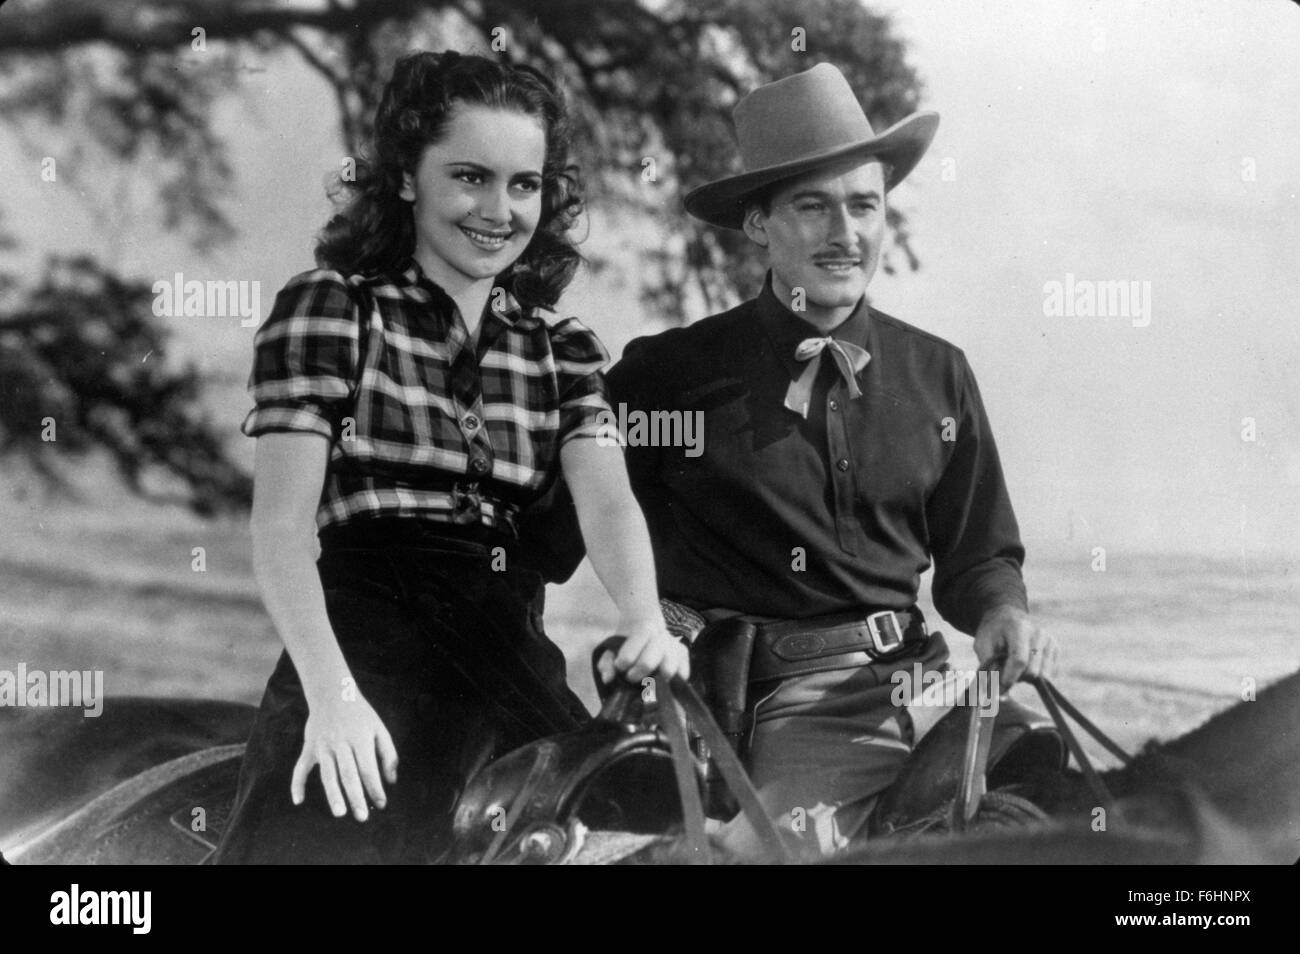 1939, Filmtitel: DODGE CITY, Regie: MICHAEL CURTIZ, Studio: WARNER, im Bild: MICHAEL CURTIZ, OLIVIA DeHAVILLAND. (Bild Kredit: SNAP) Stockfoto